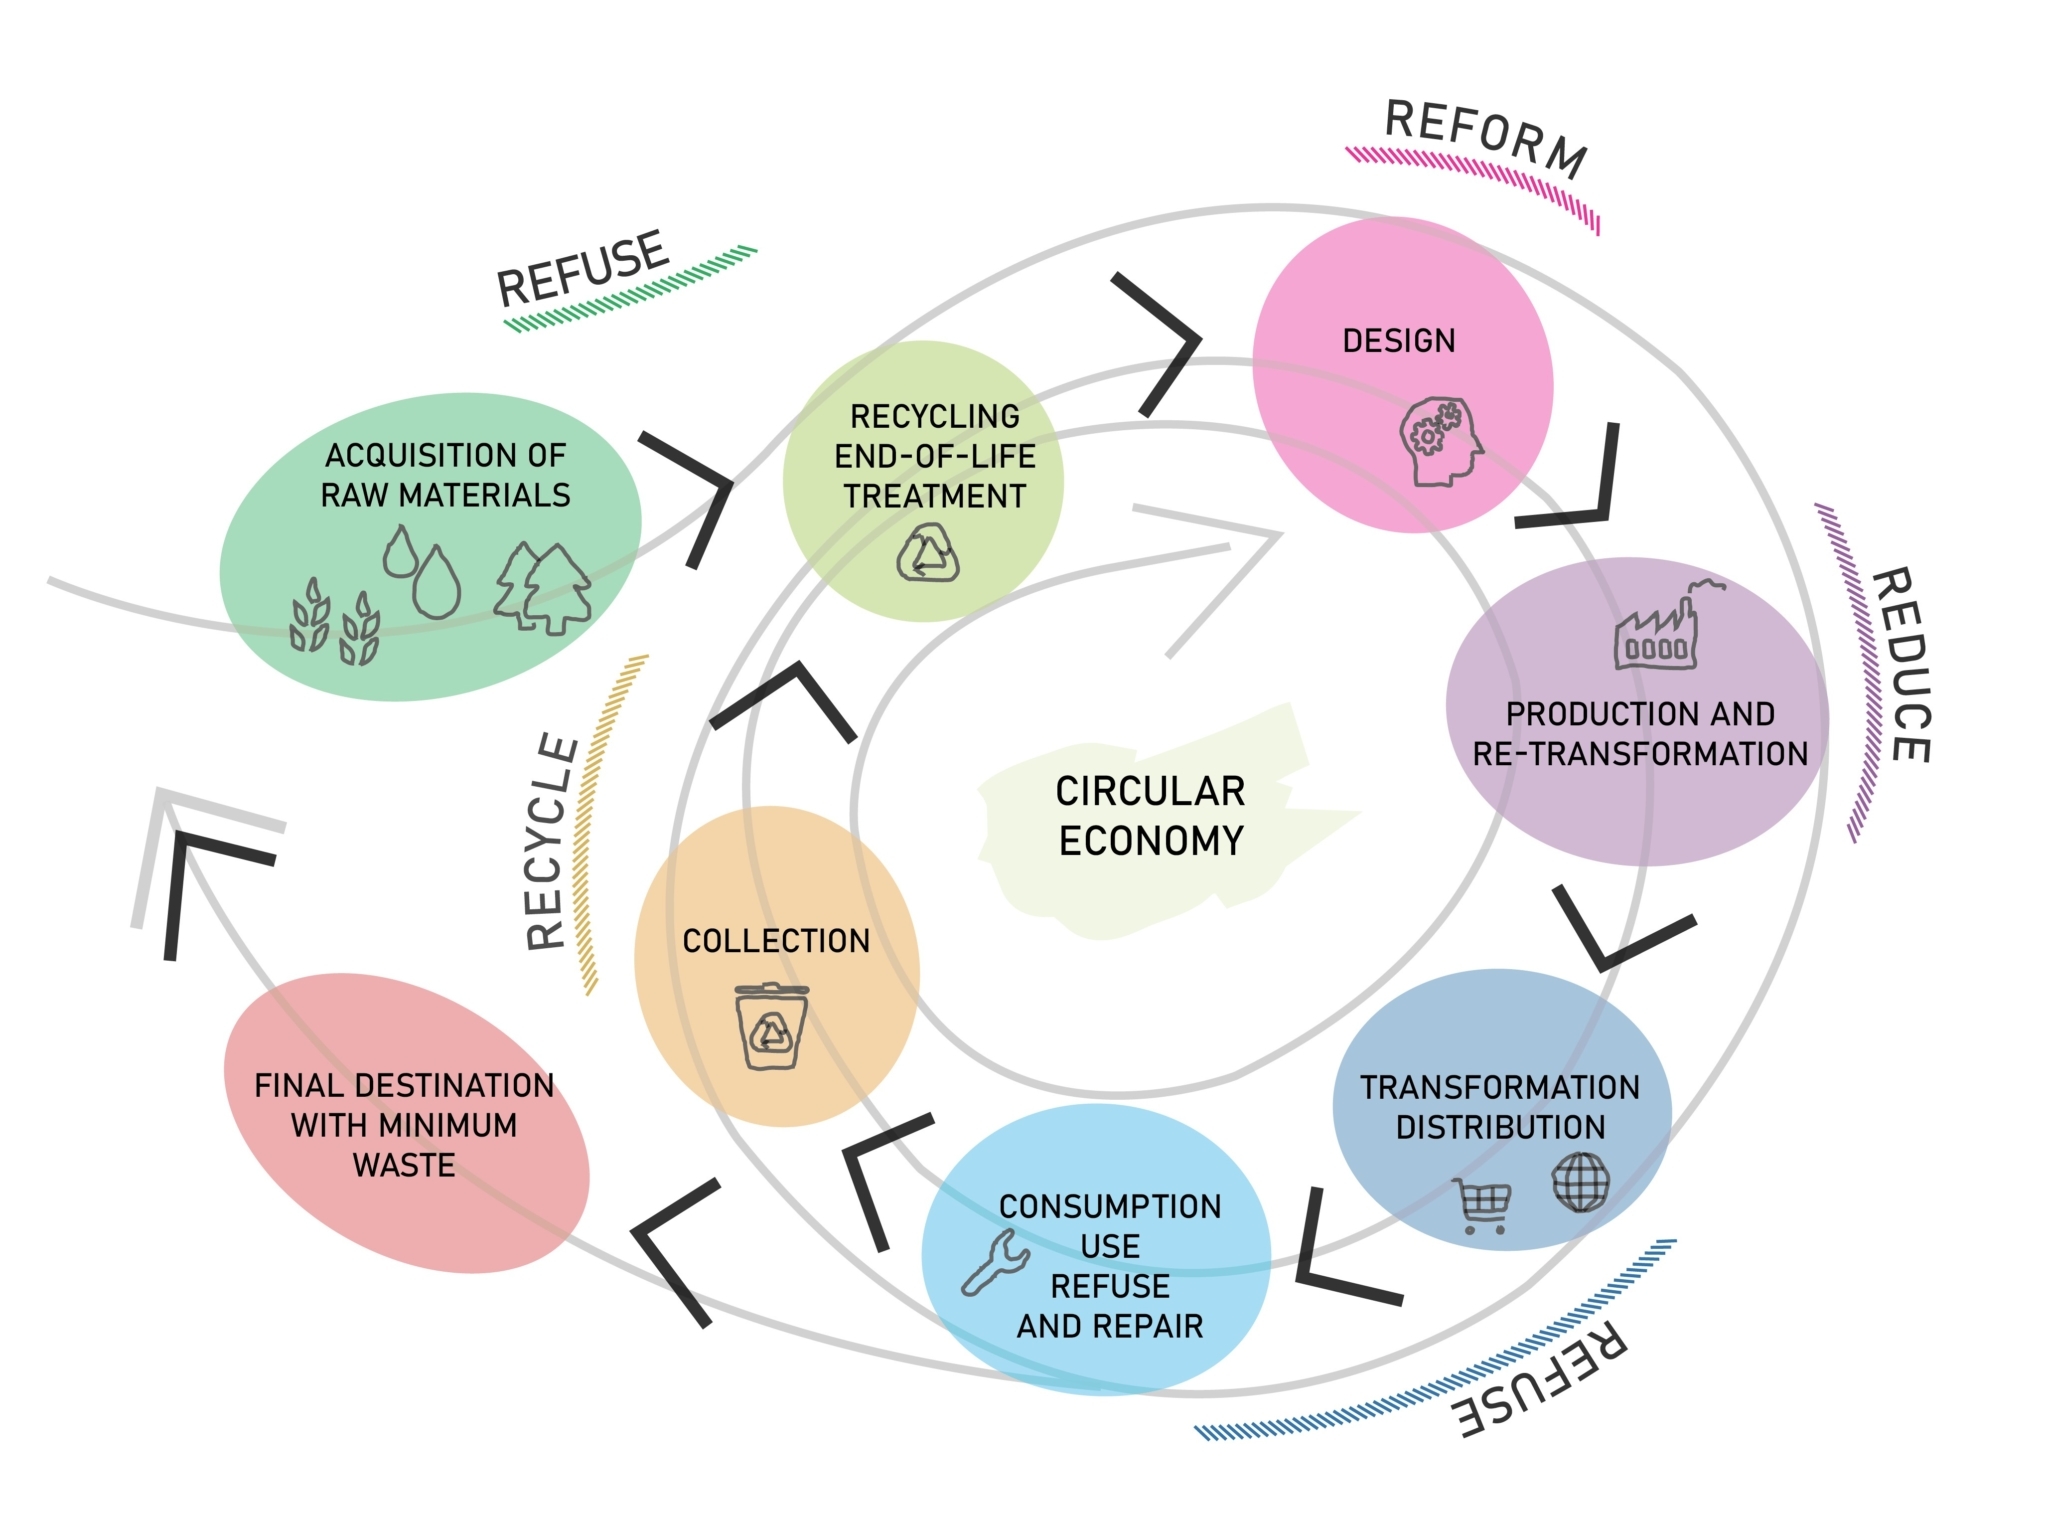 Circular Economy Roadmap